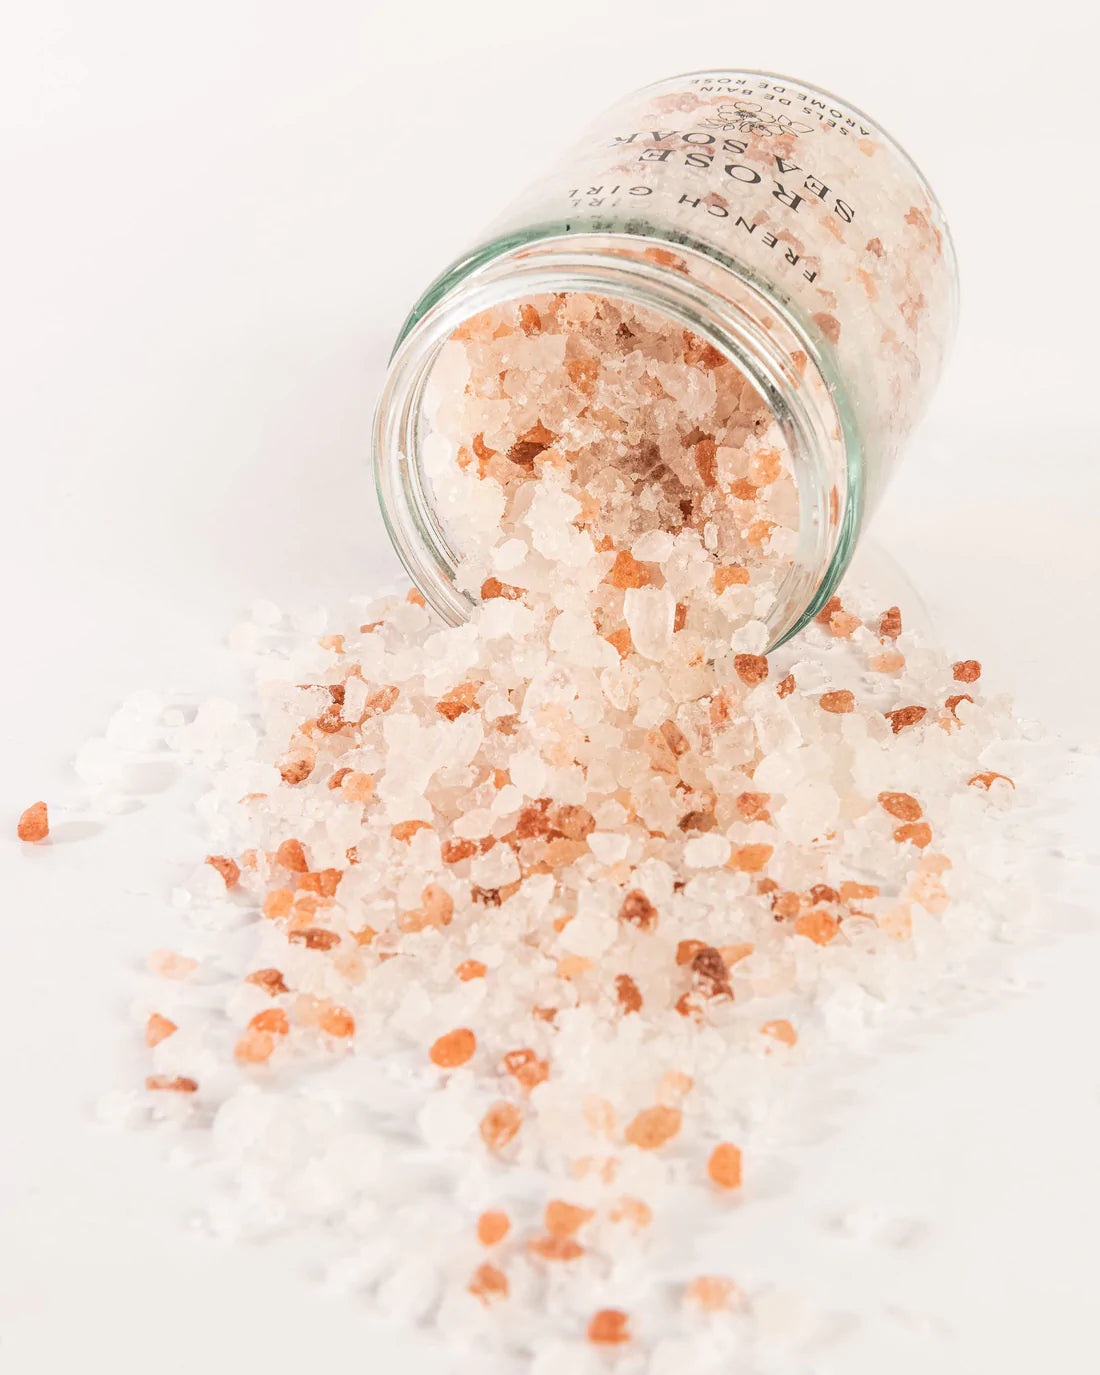 Rose Sea Soak | Calming Bath Salts